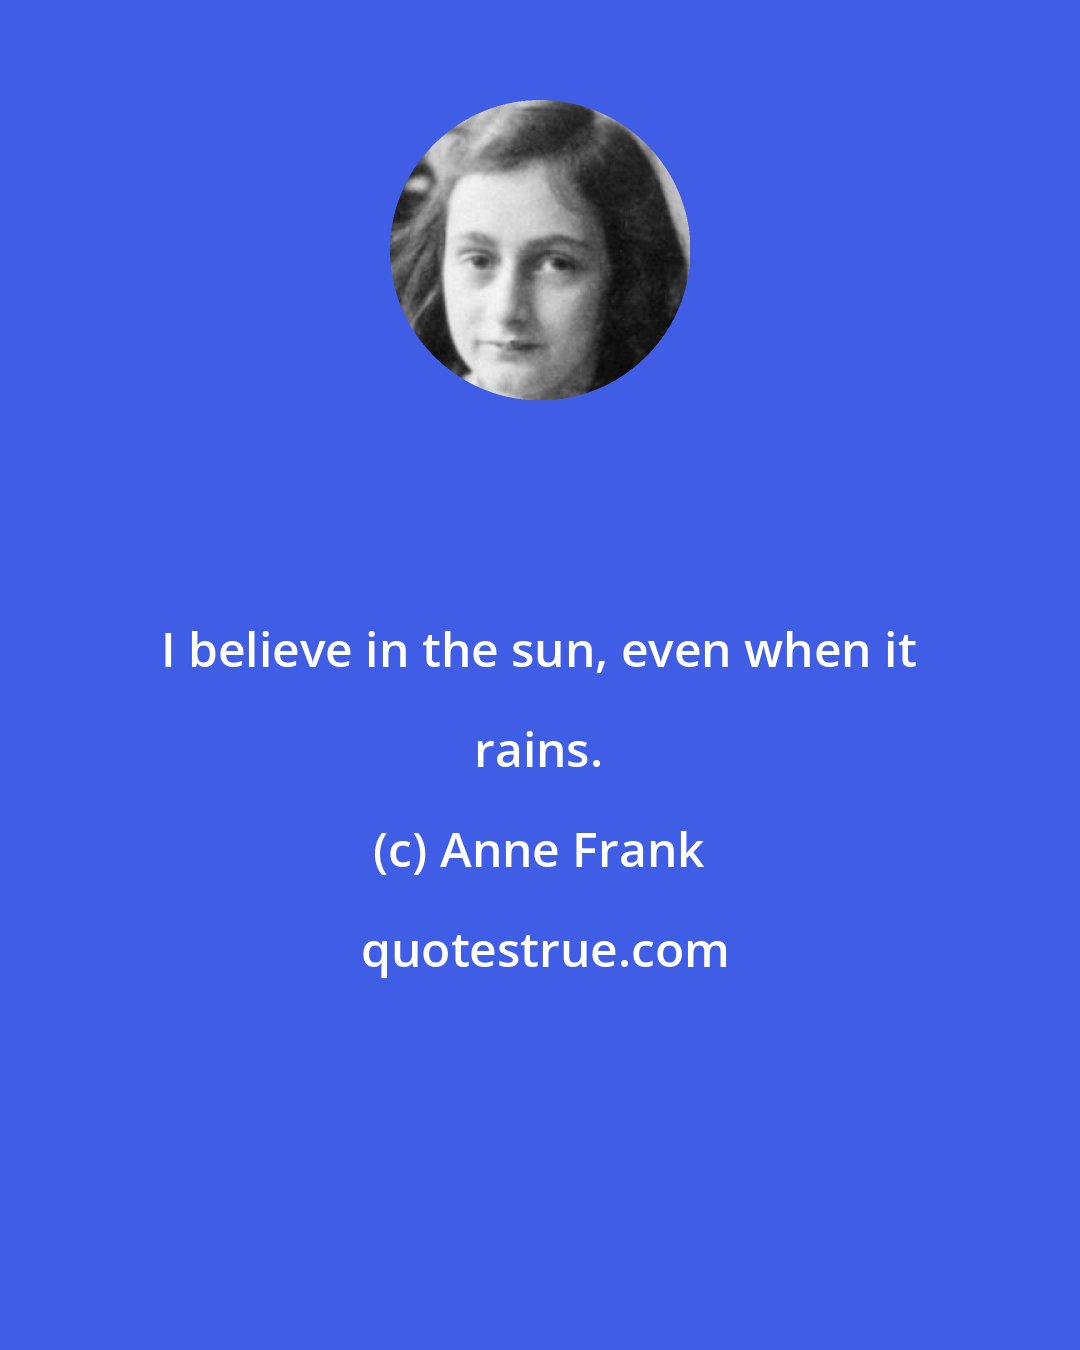 Anne Frank: I believe in the sun, even when it rains.